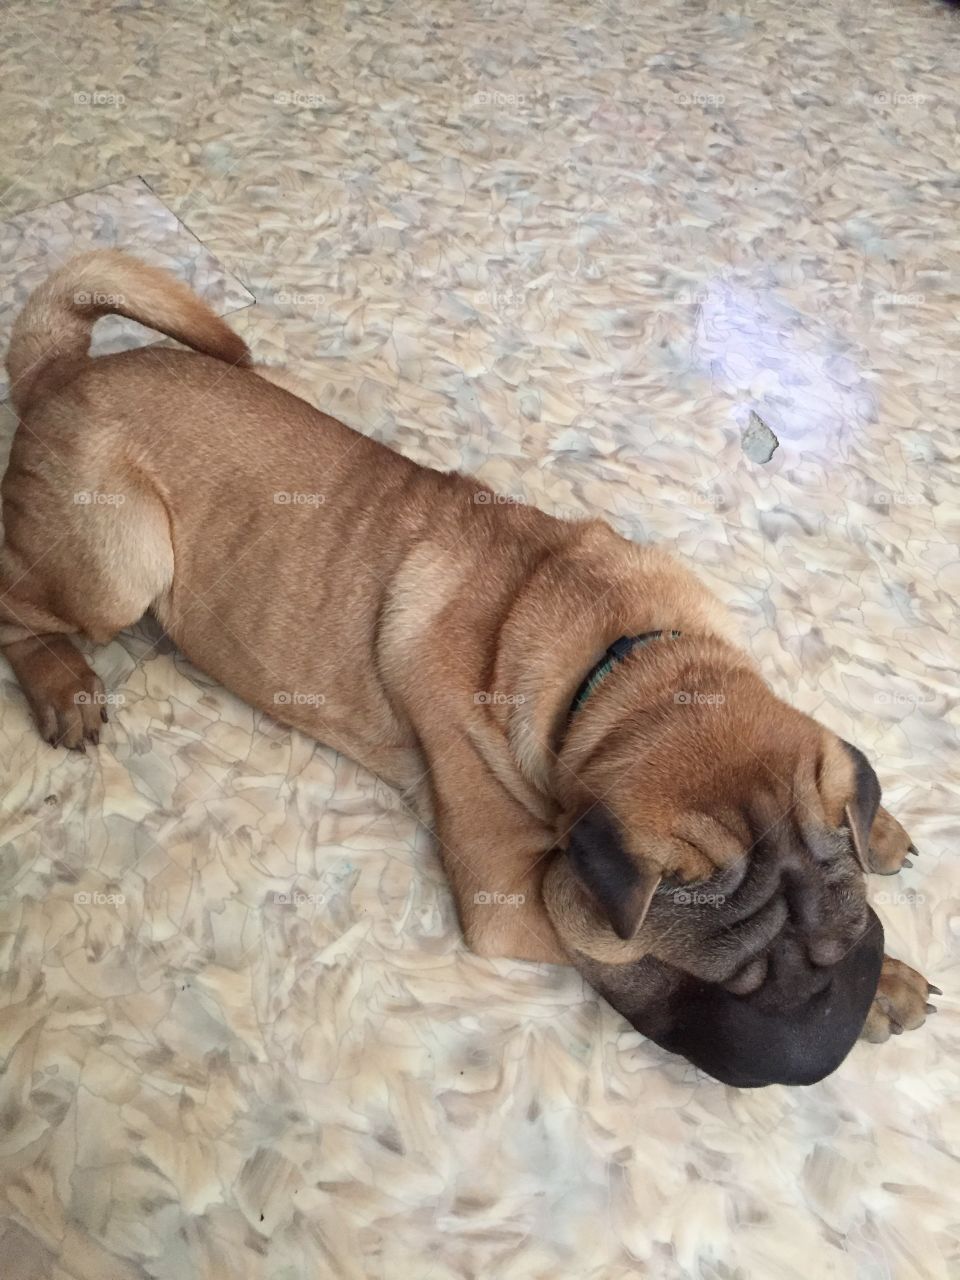 Cute dog sleeping on carpet